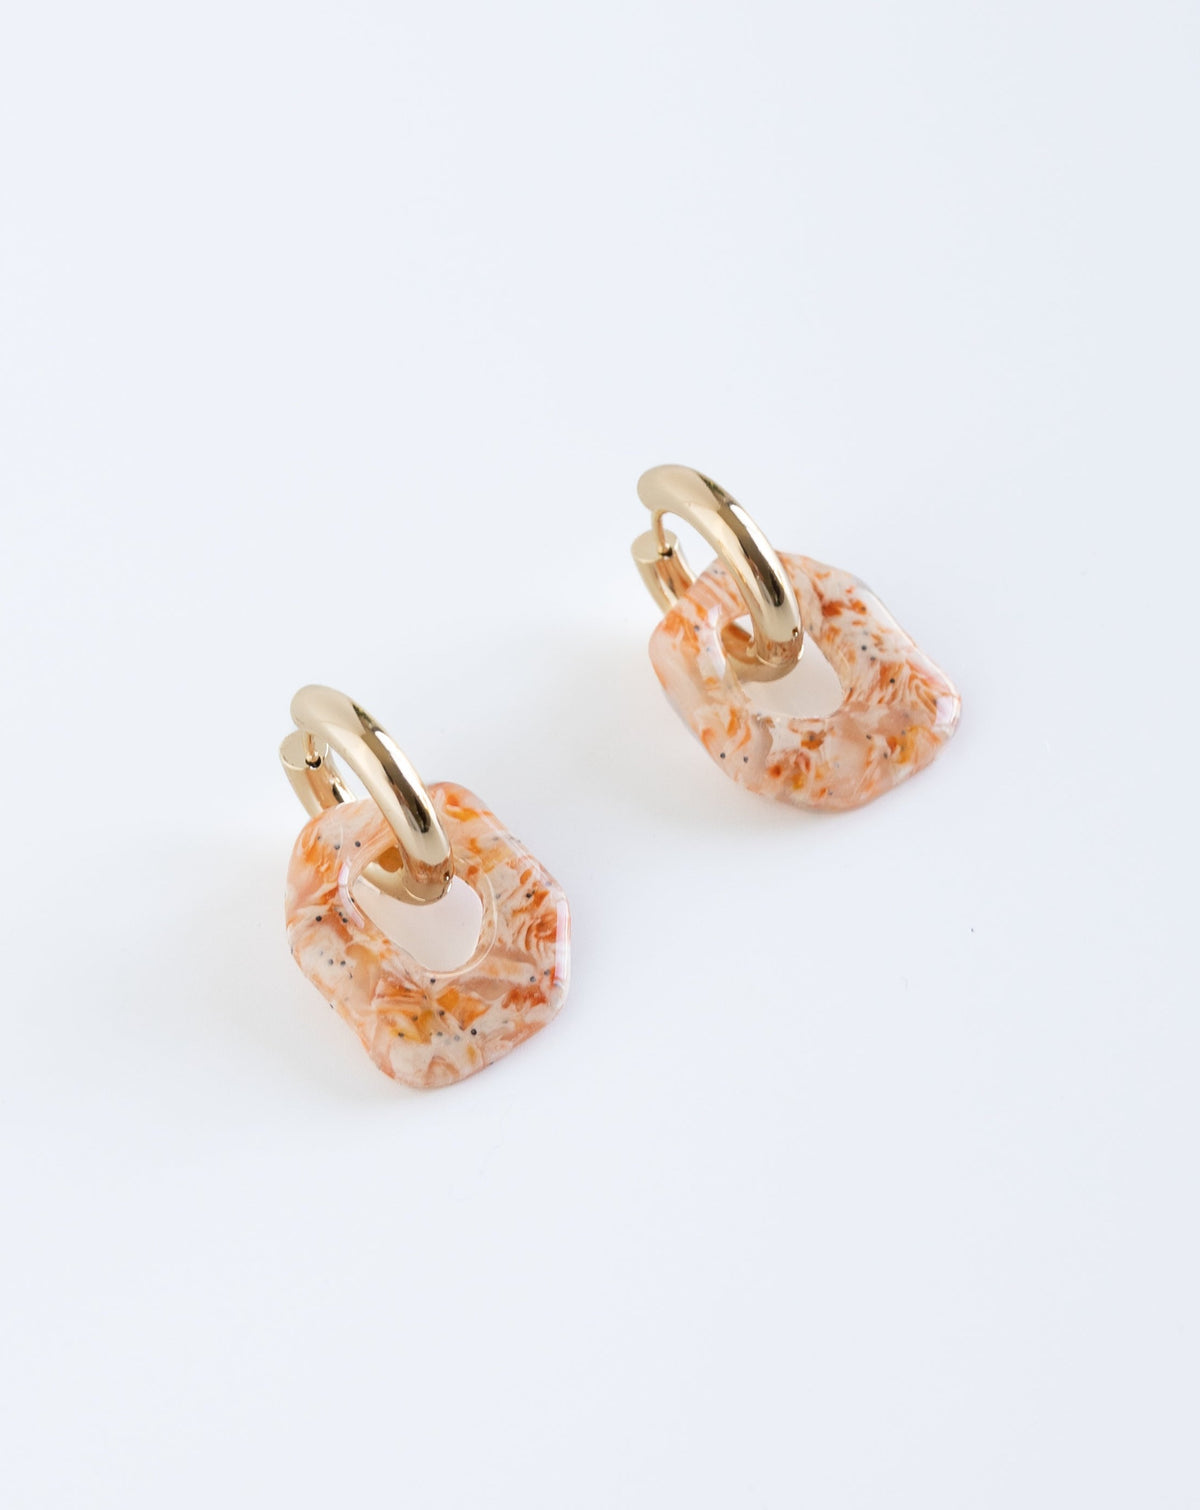 Darien earrings in Marble orange pattern with gold hoops, angled view